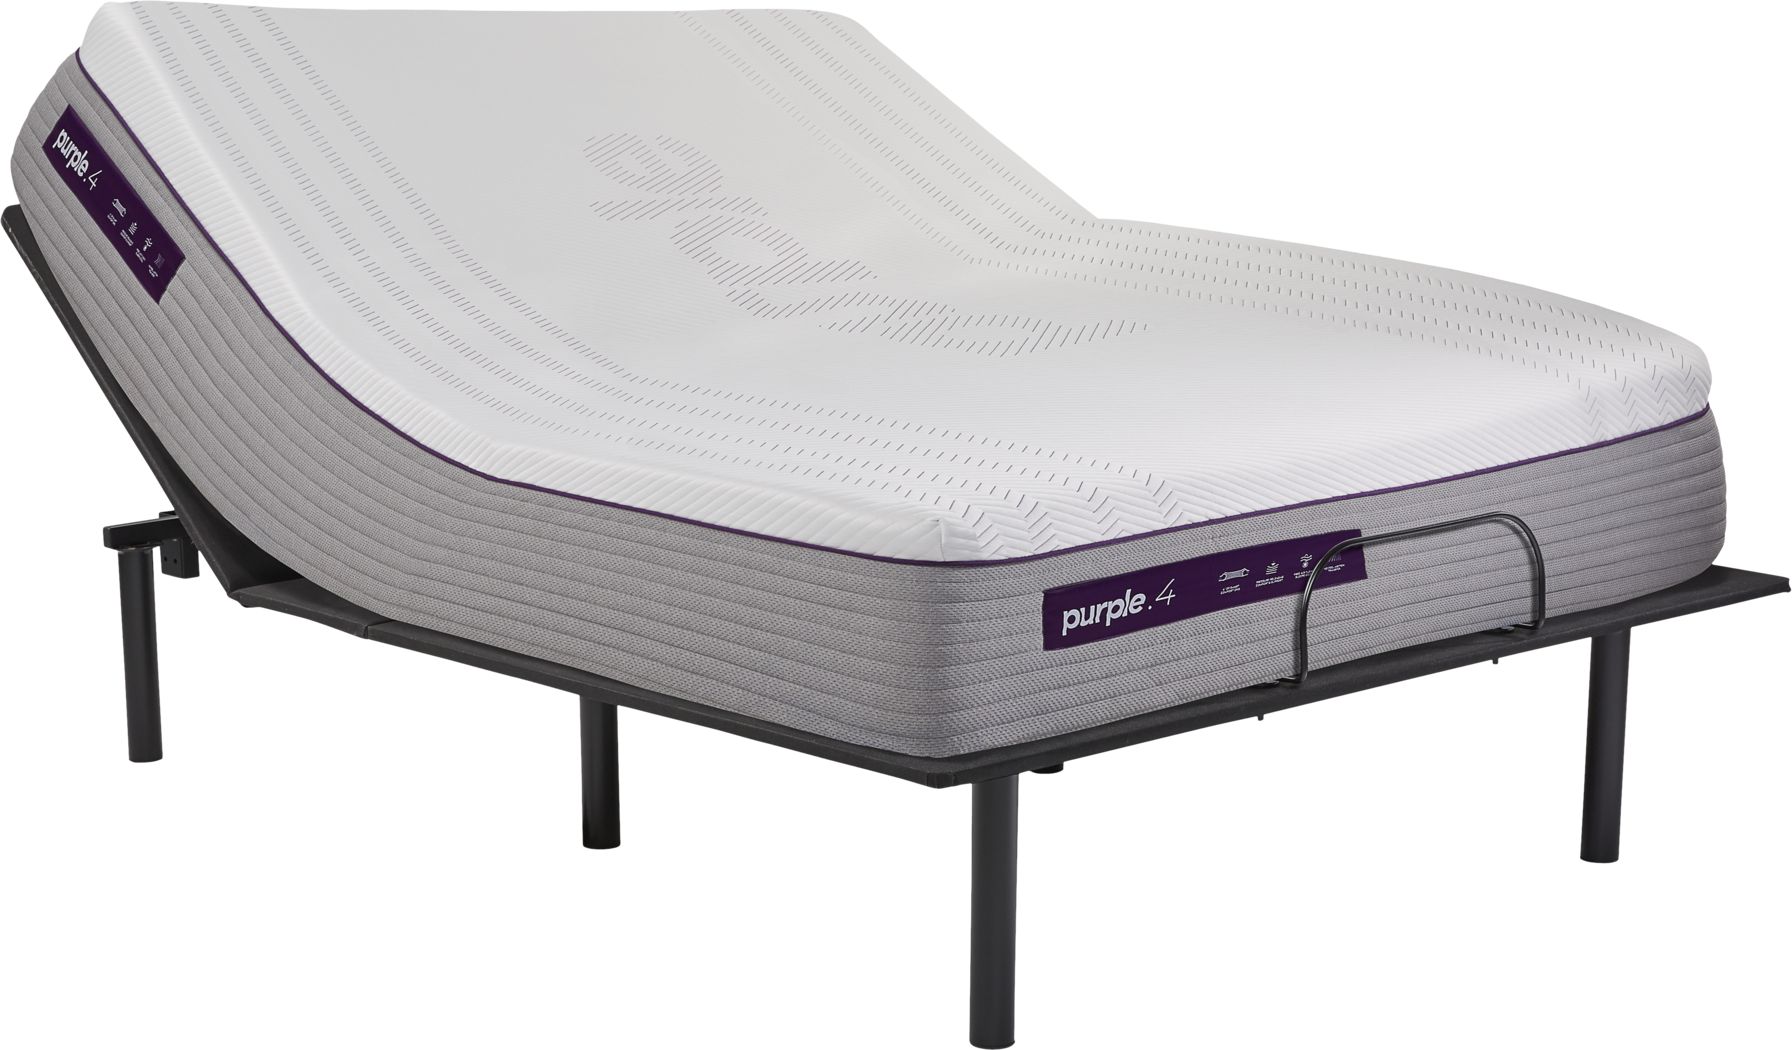 purple 3 hybrid premier mattress dimensions